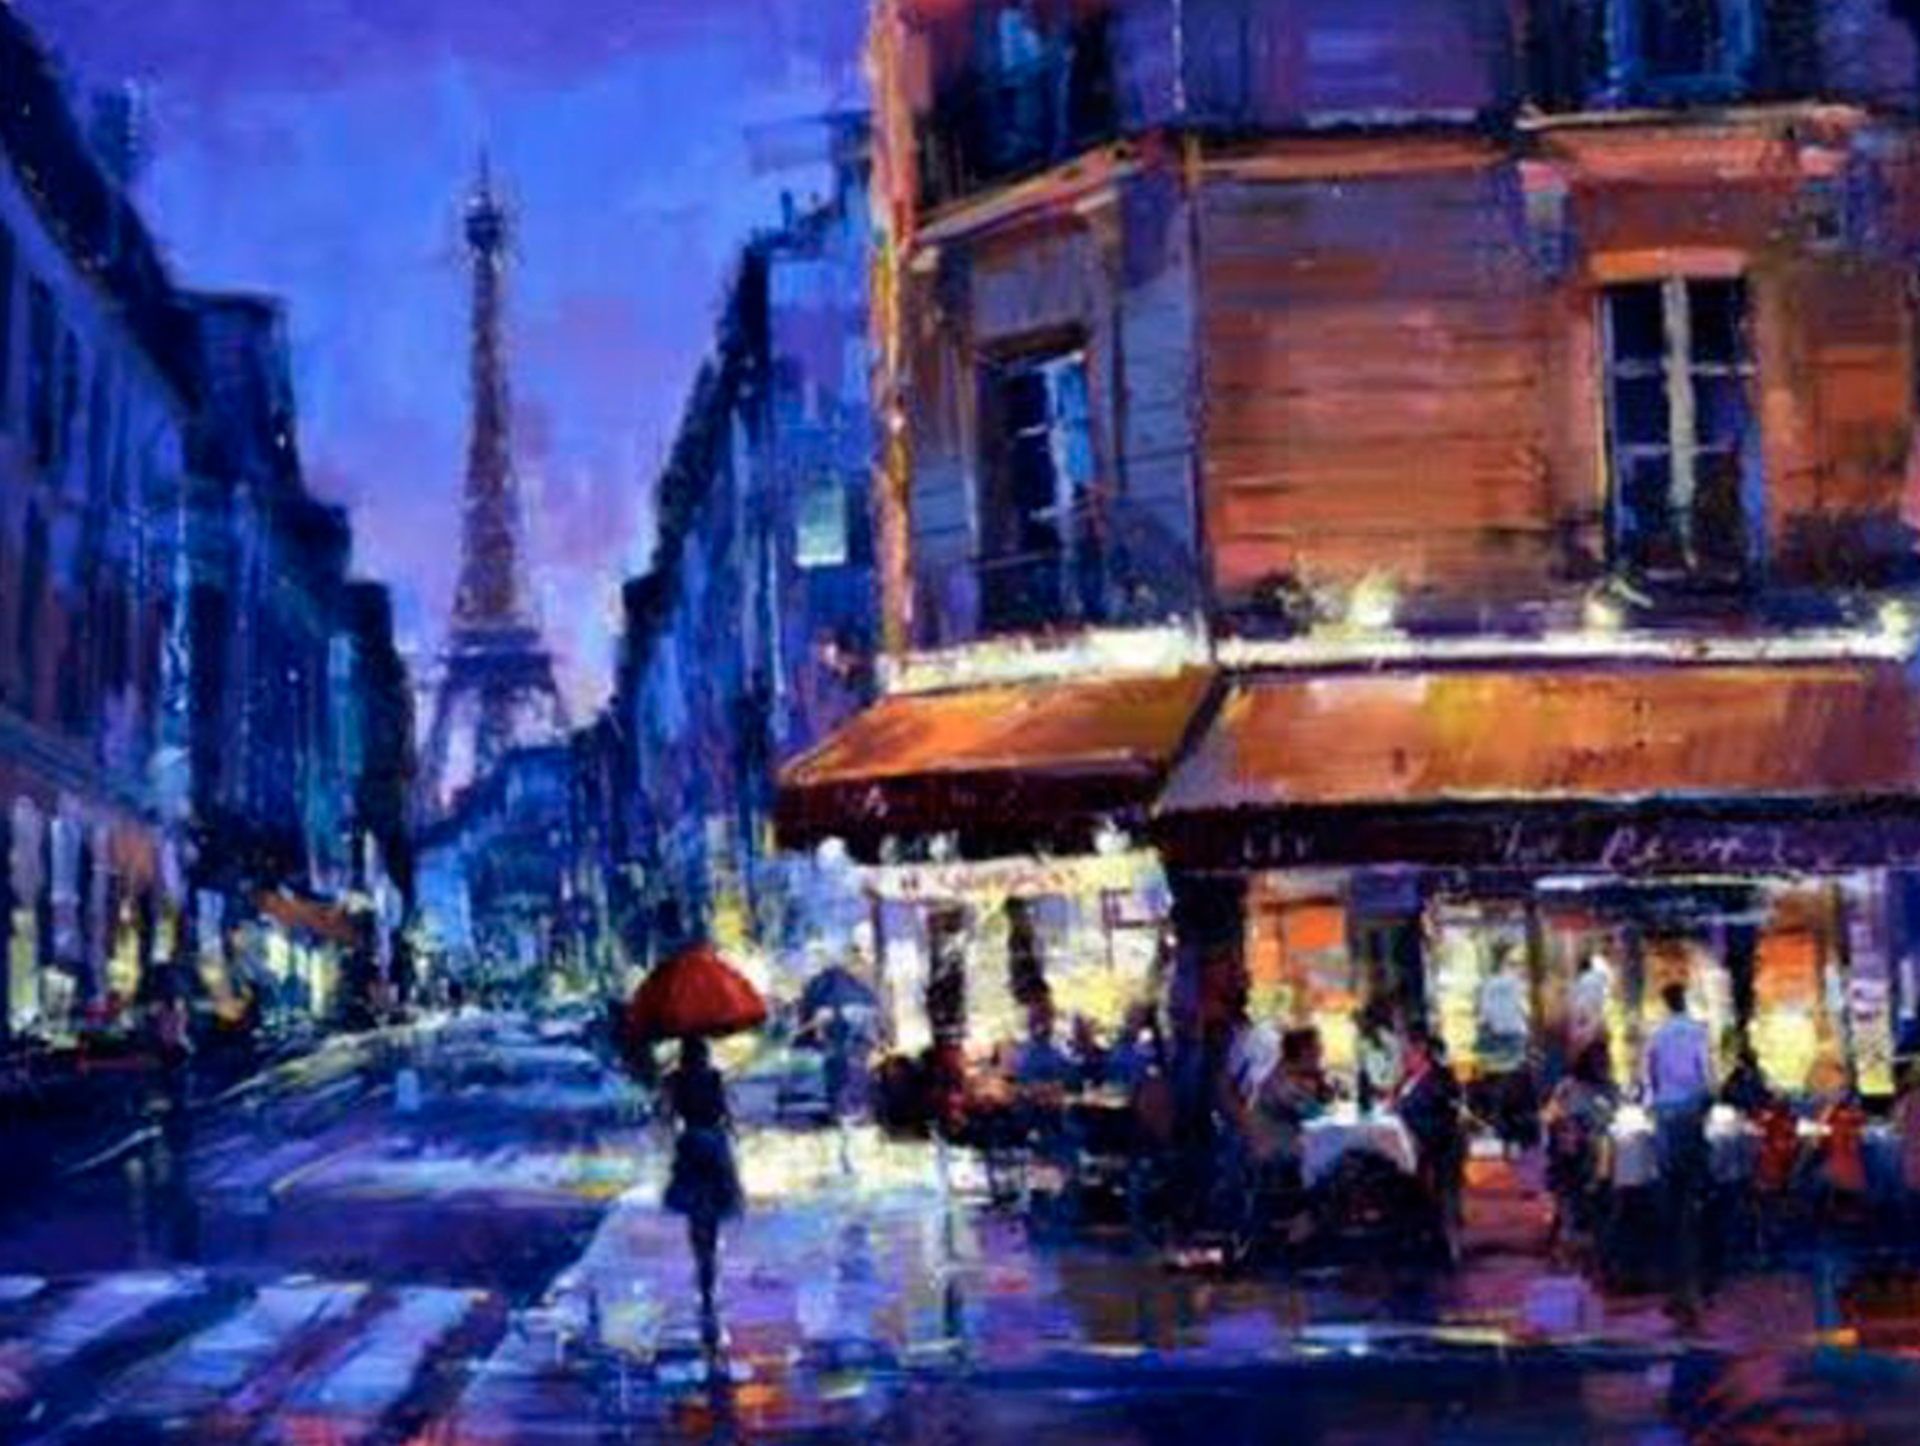 Parisian Rain by Michael Flohr